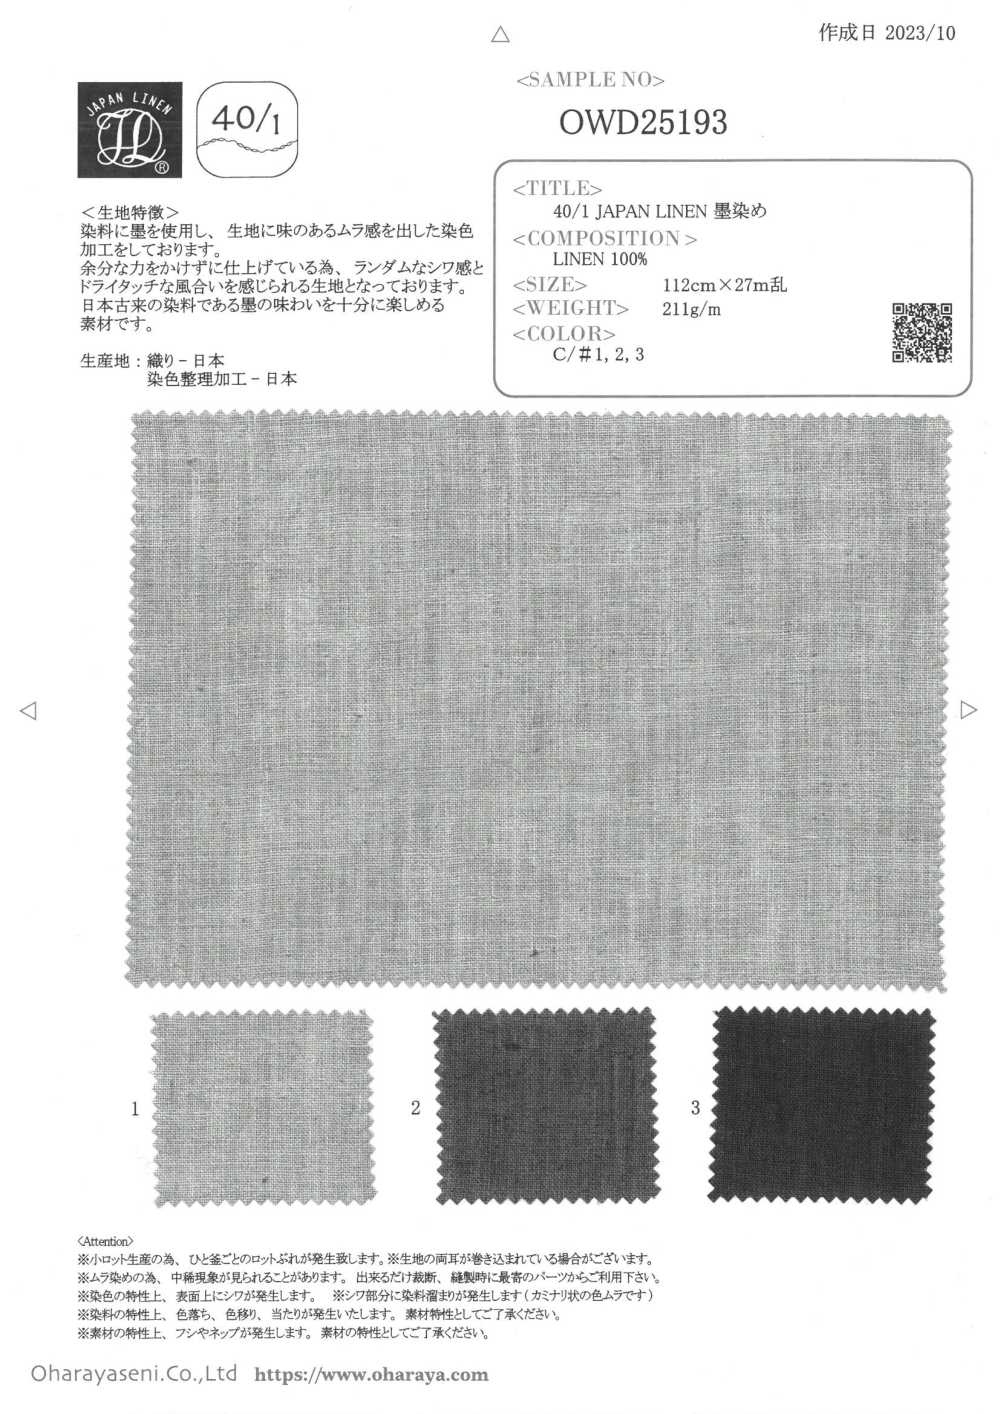 OWD25193 40/1 LINO JAPÓN Sumi-teñido[Fabrica Textil] Oharayaseni